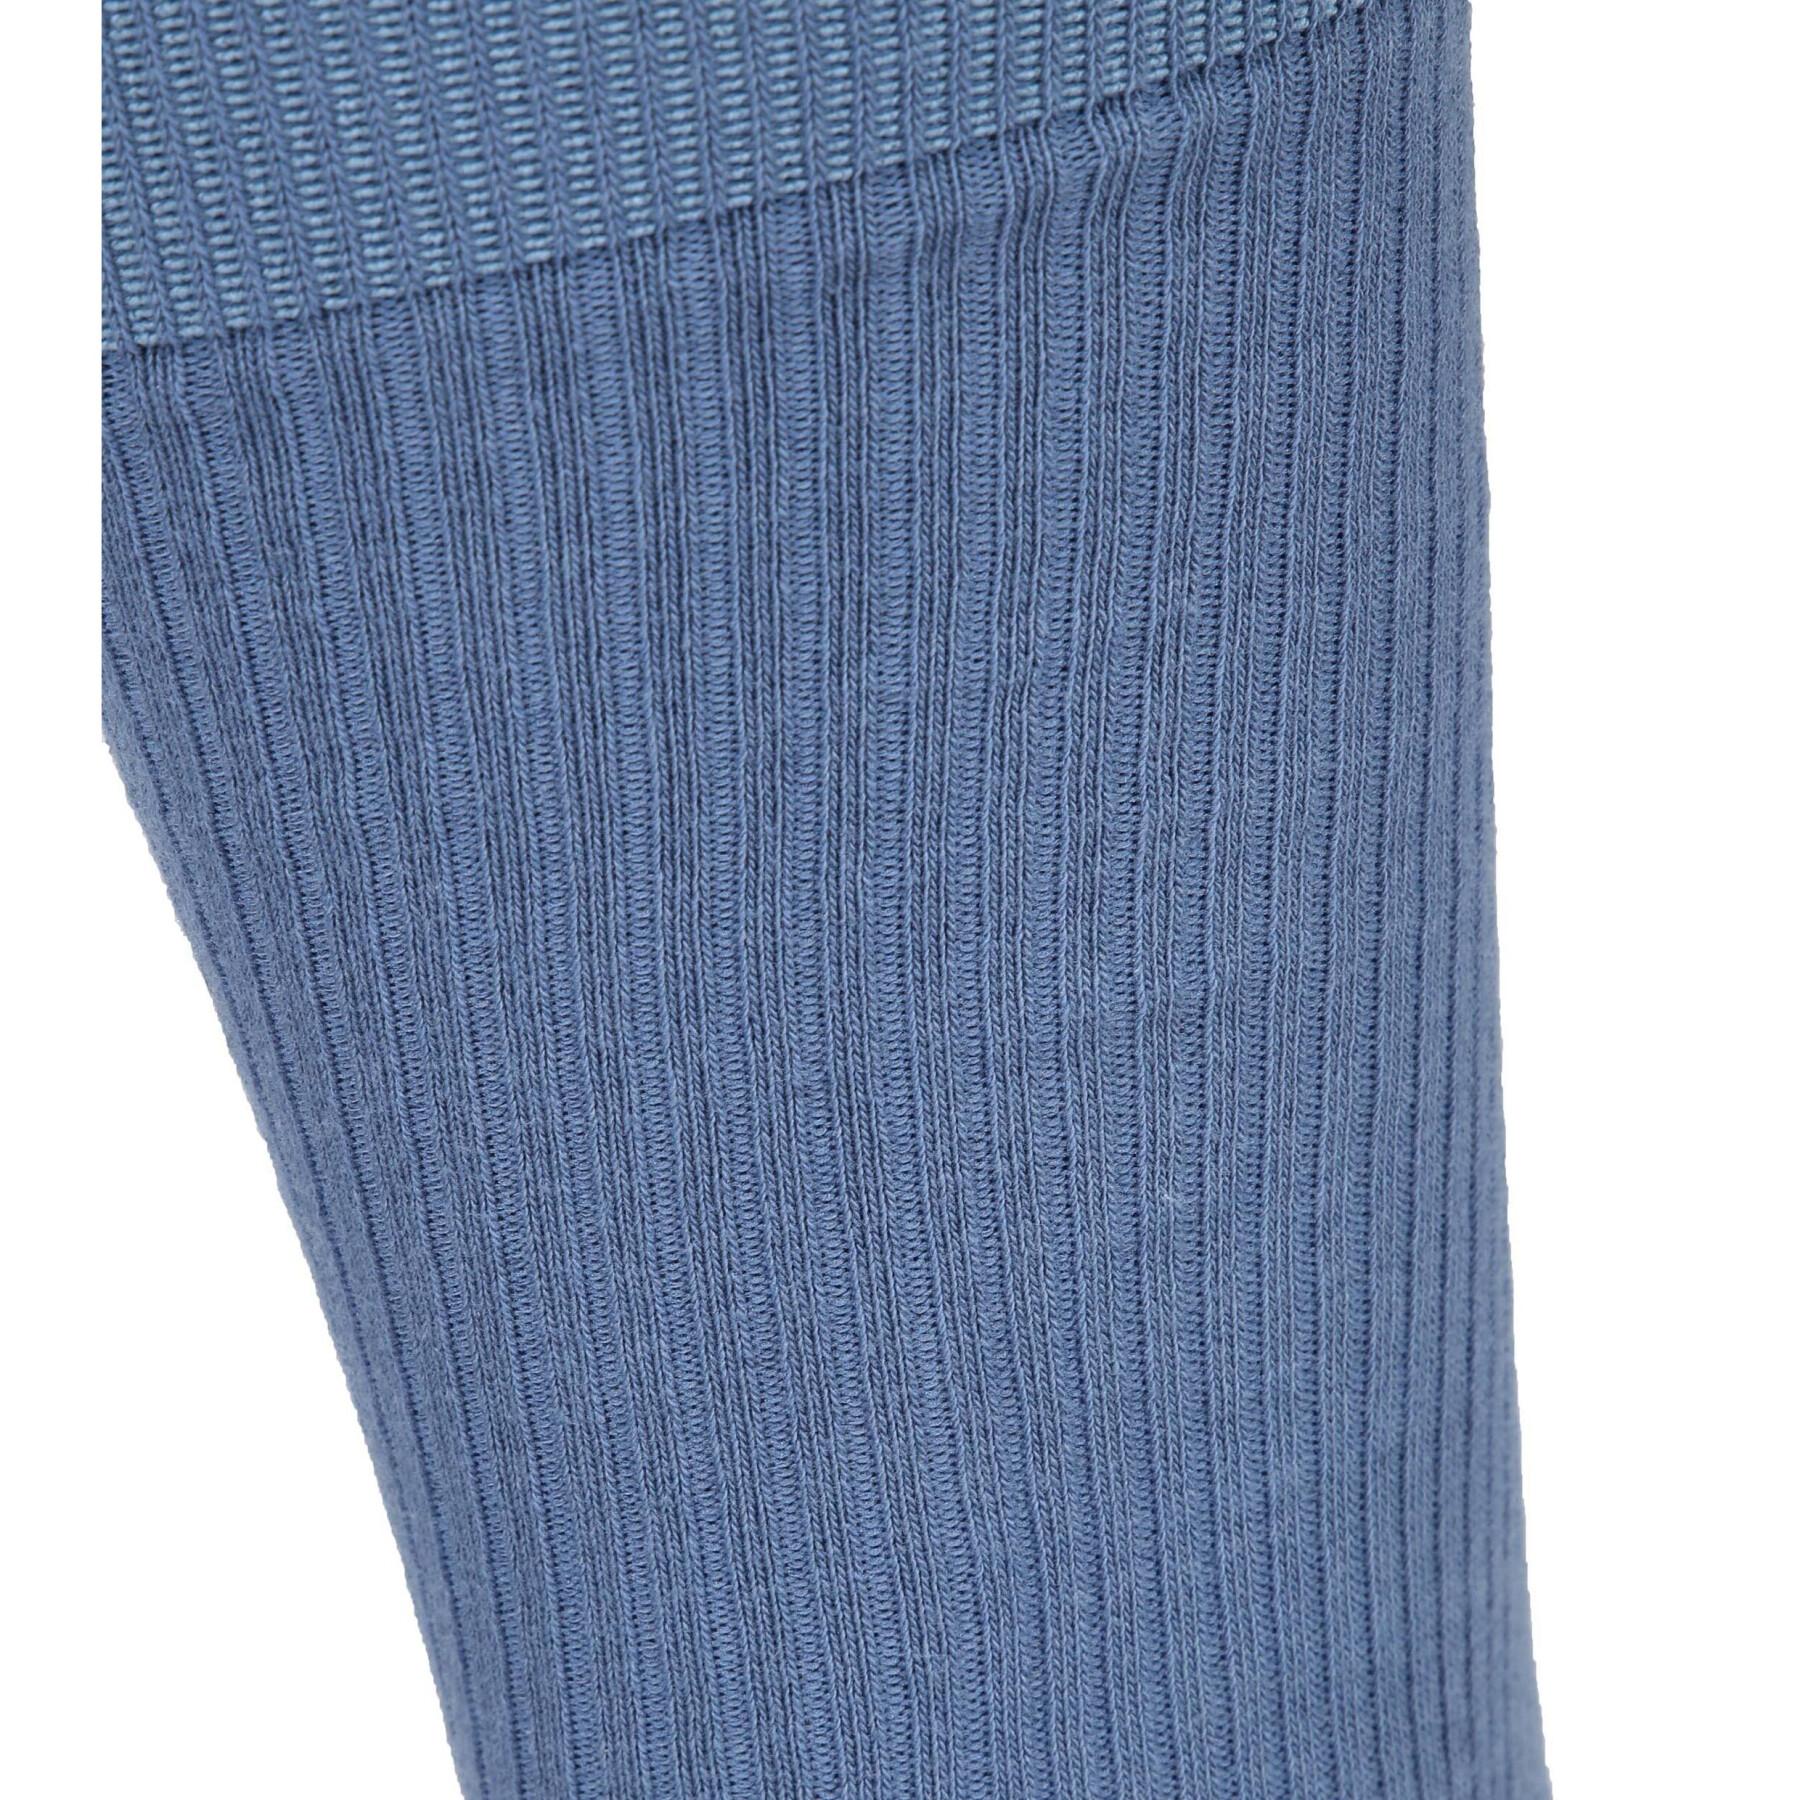 Socken Colorful Standard Classic Organic petrol blue